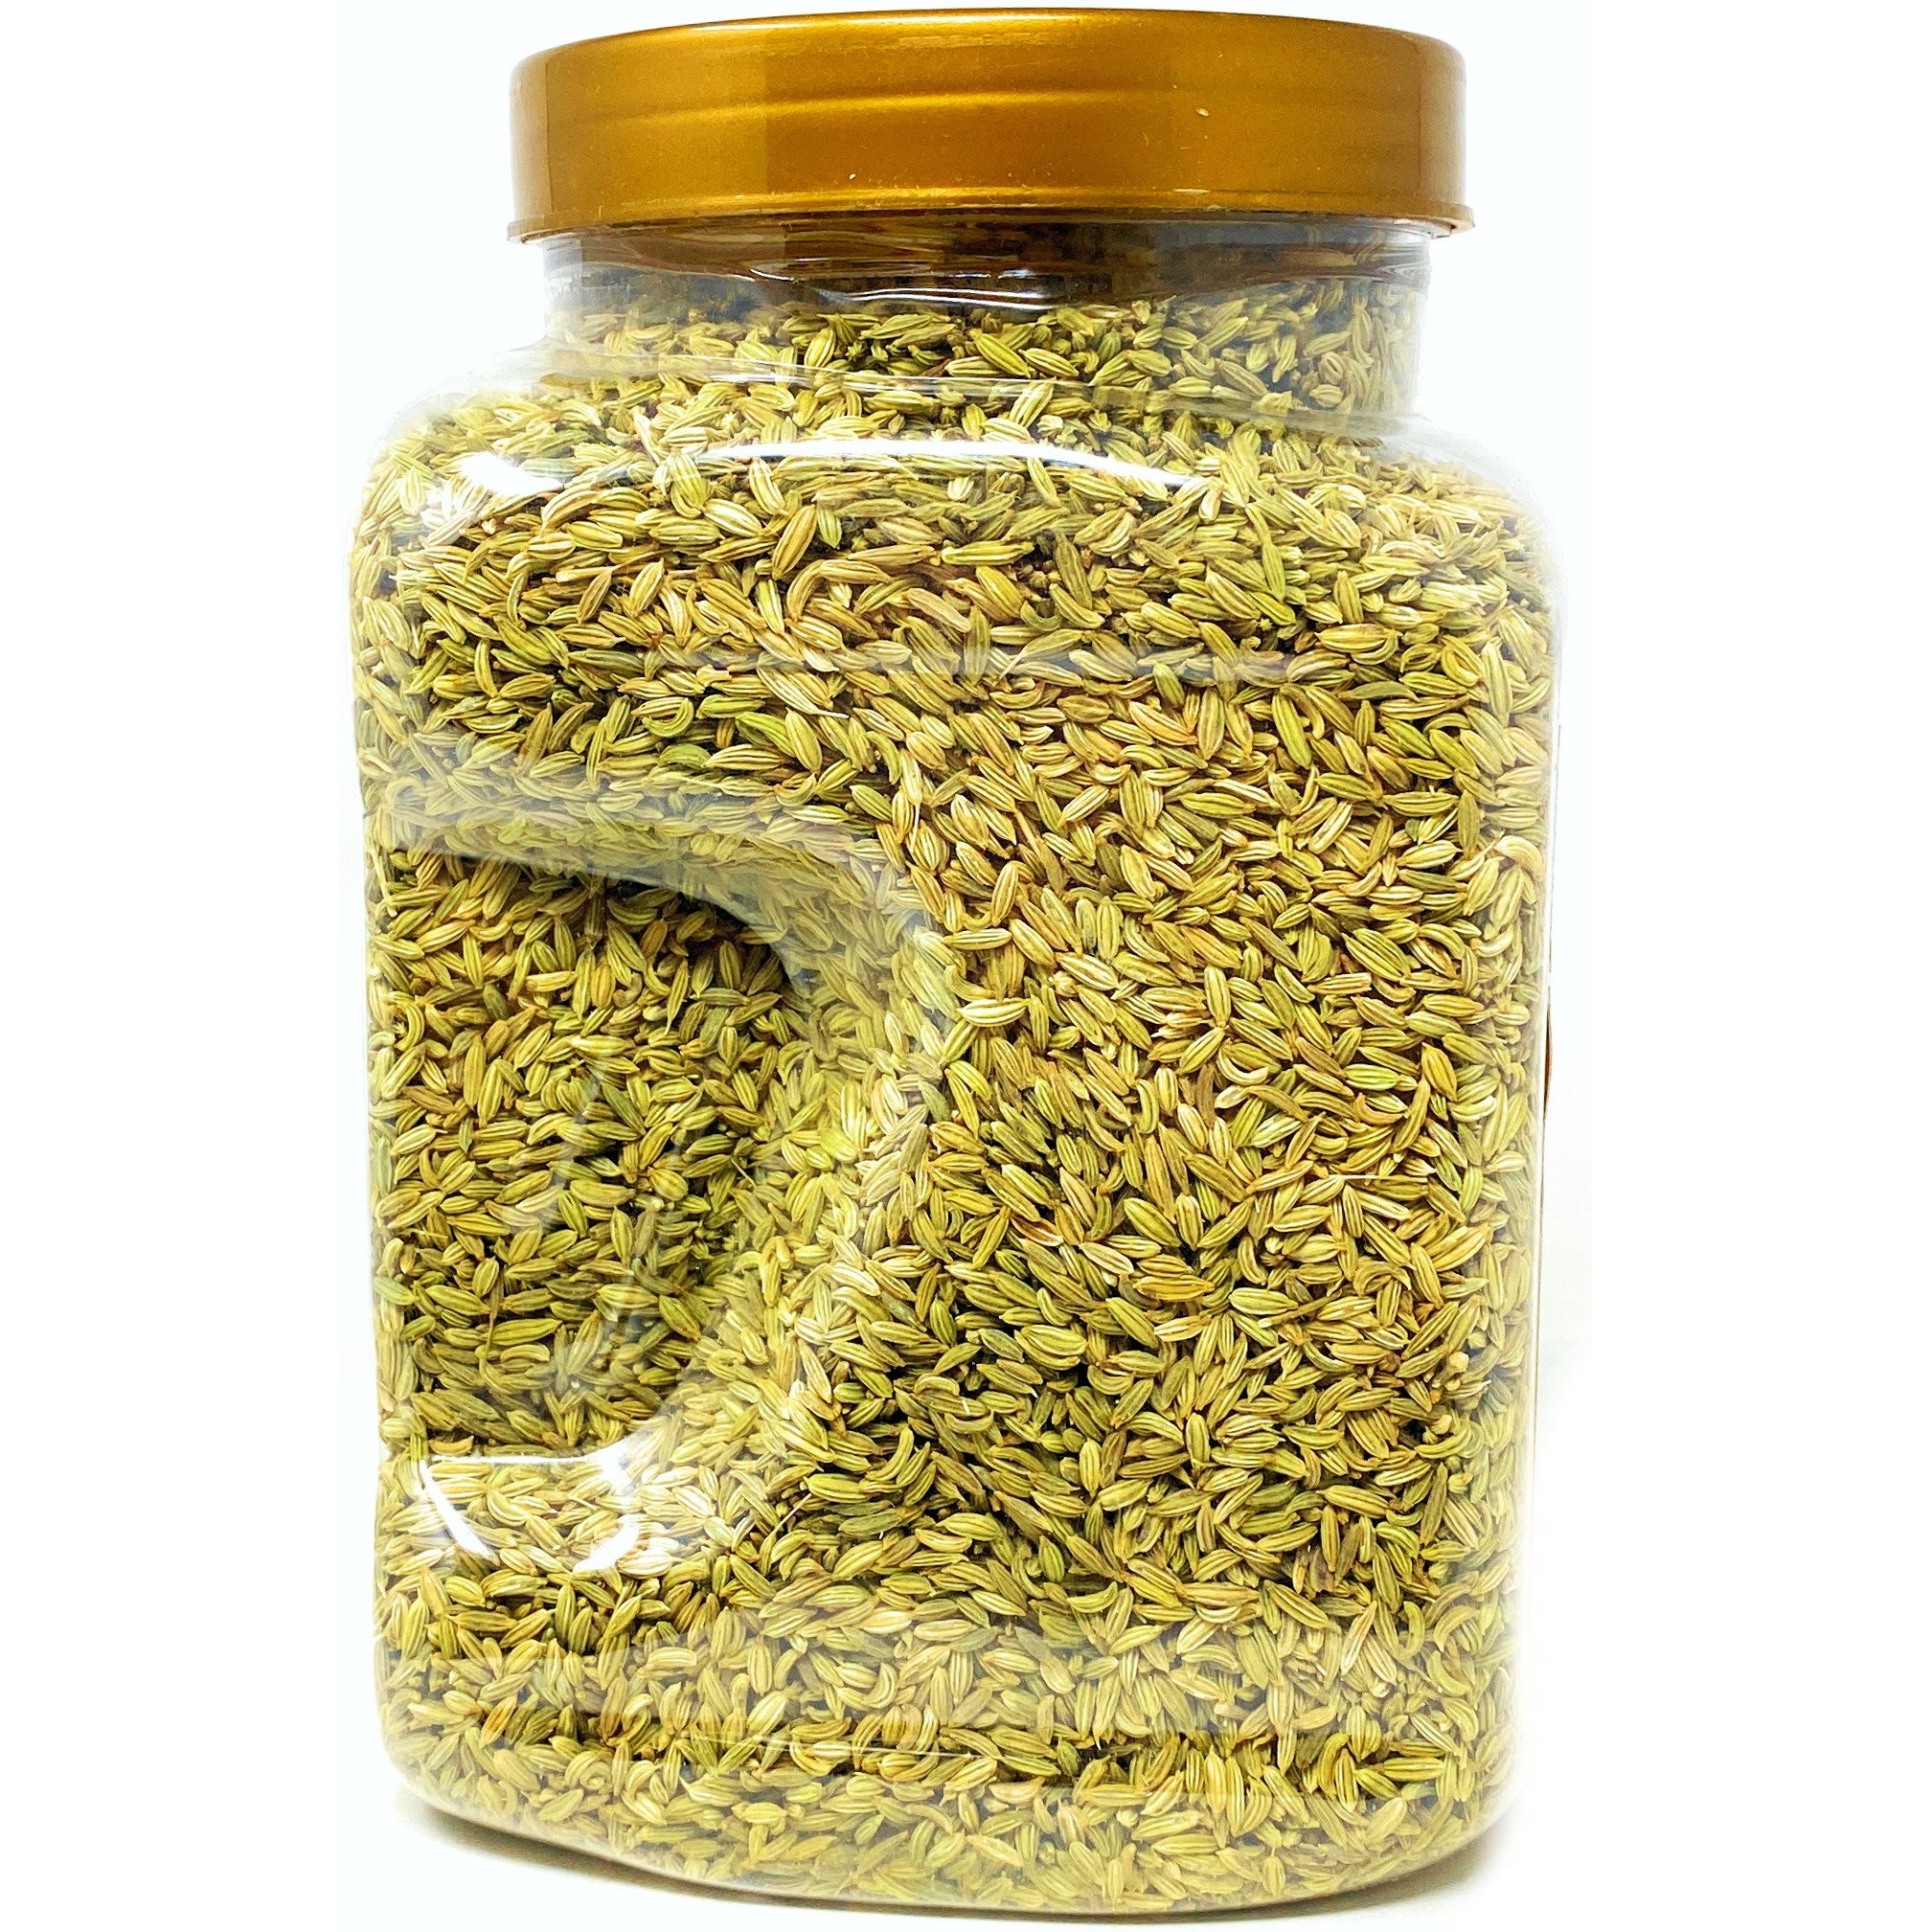 Rani Fennel (Saunf) Seeds Whole, Indian Spice 2lbs (32oz) PET Jar, All Natural ~ Gluten Friendly | NON-GMO | Vegan | Indian Origin